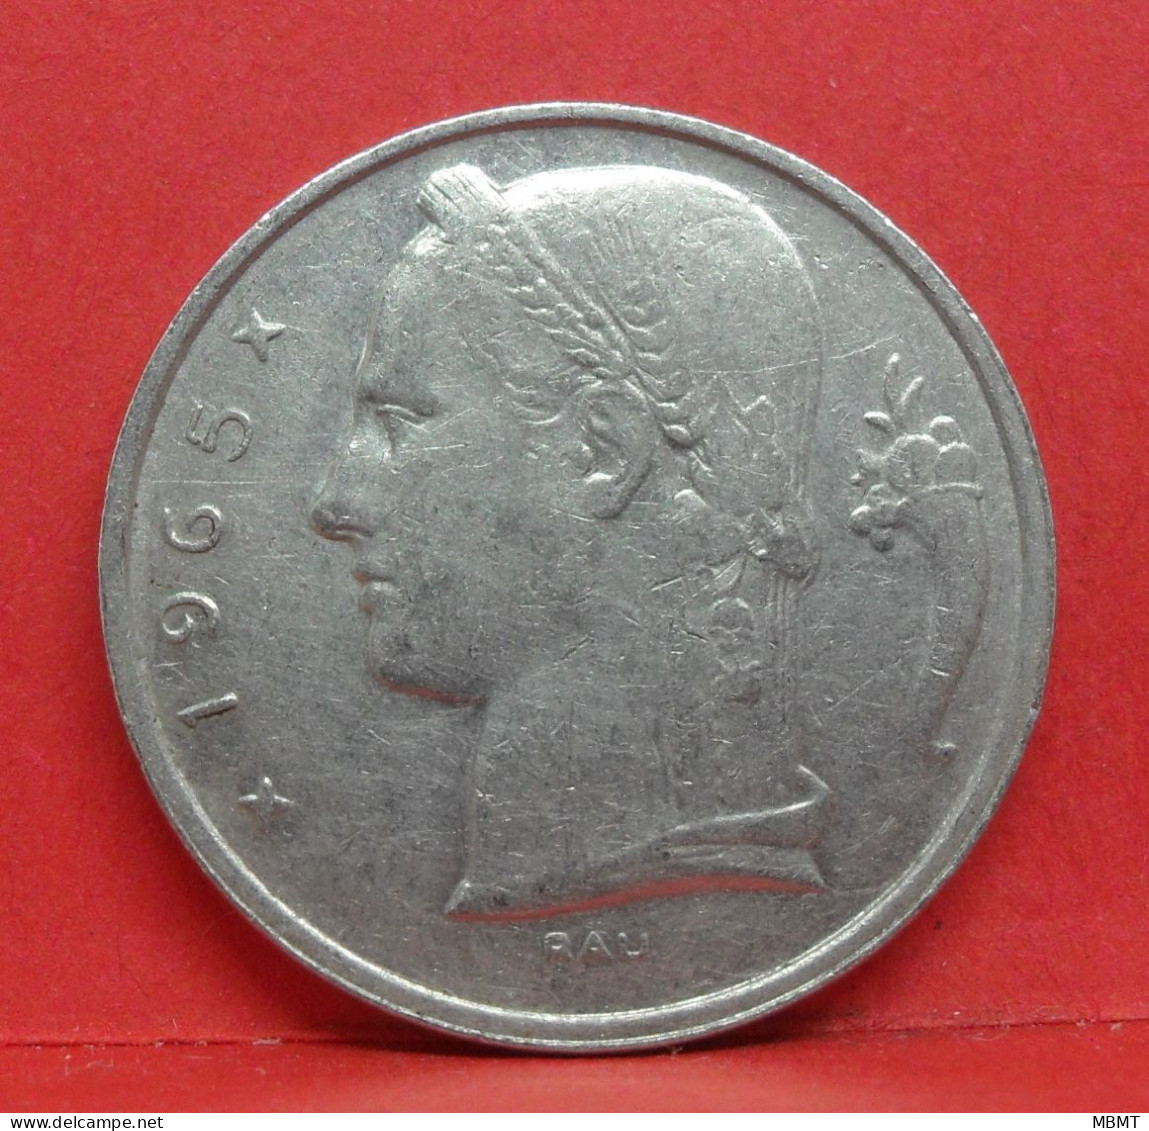 5 Frank 1965 - TTB - Pièce Monnaie Belgie - Article N°1987 - 5 Frank